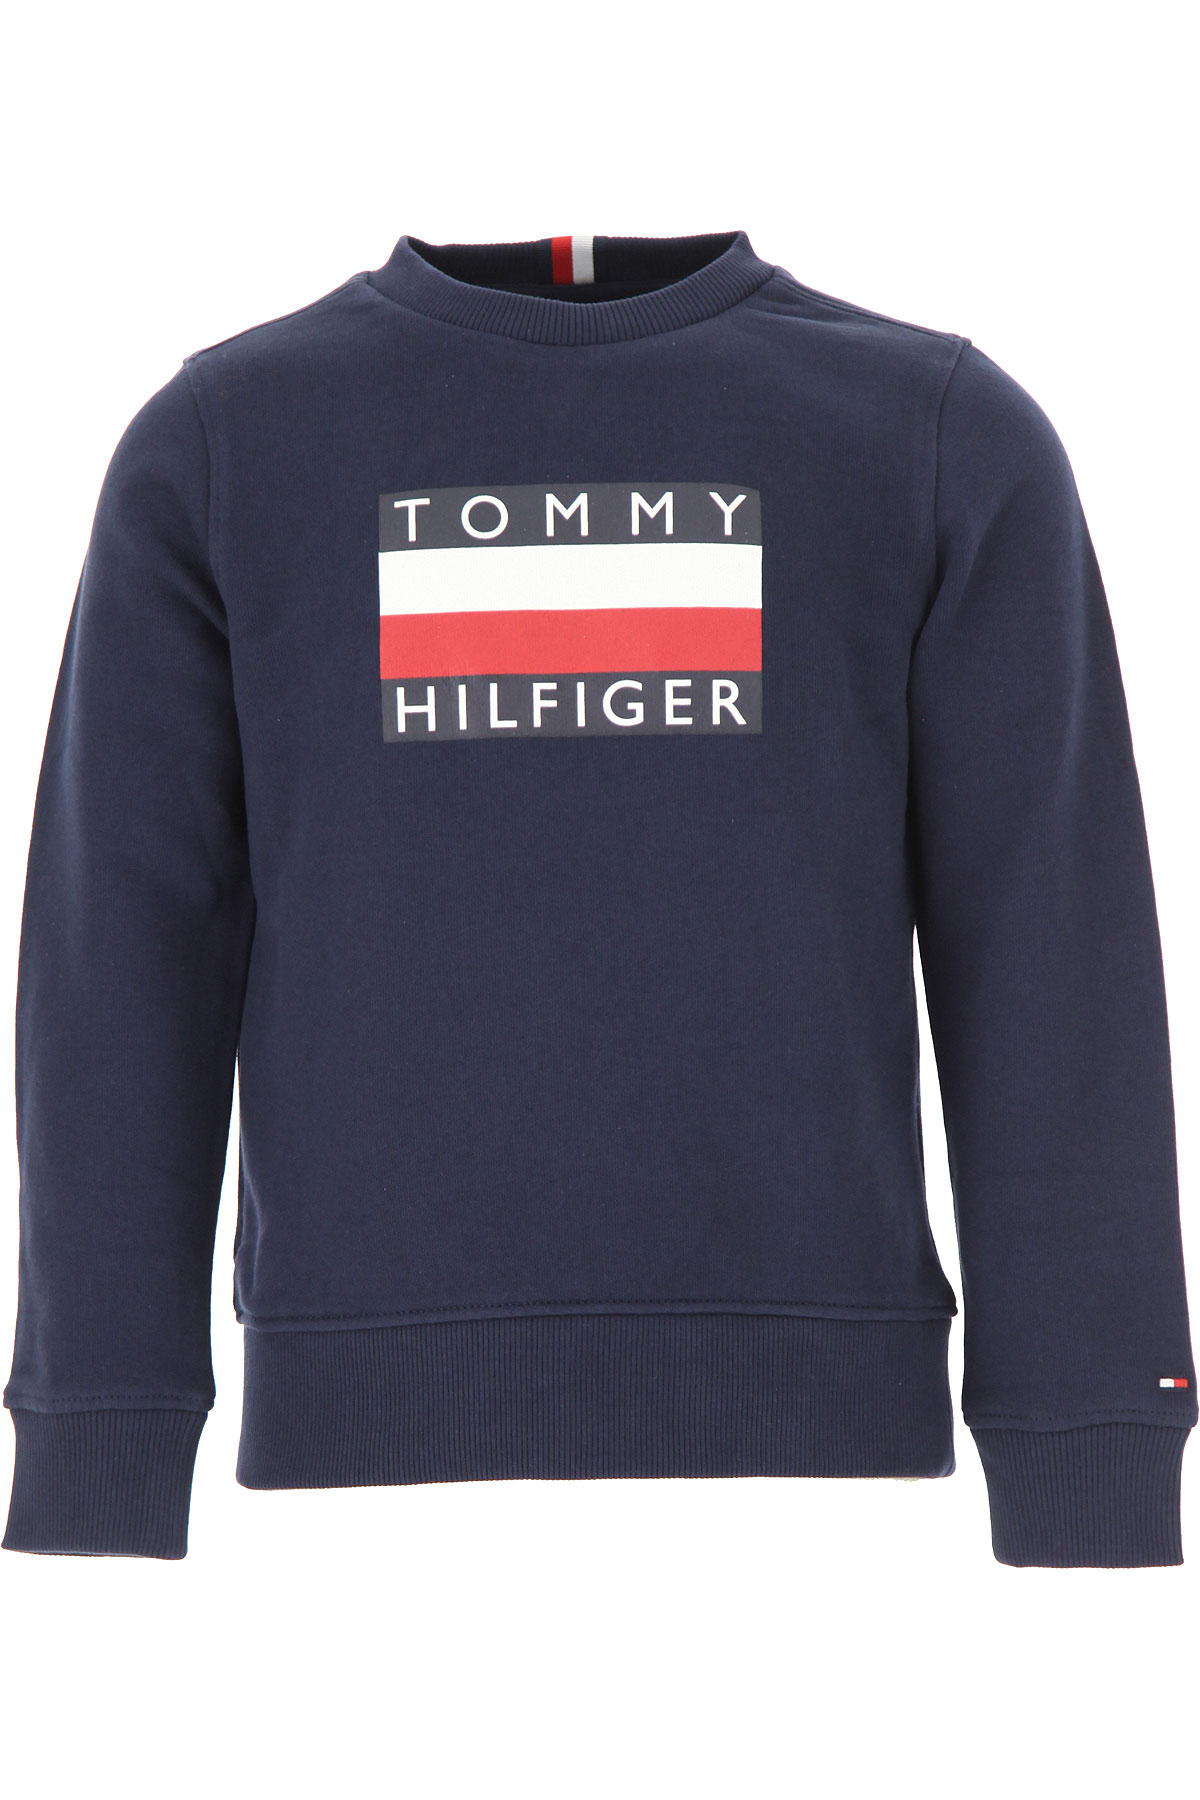 Kidswear Tommy Hilfiger, Style code: kb0kb05474-cbk-